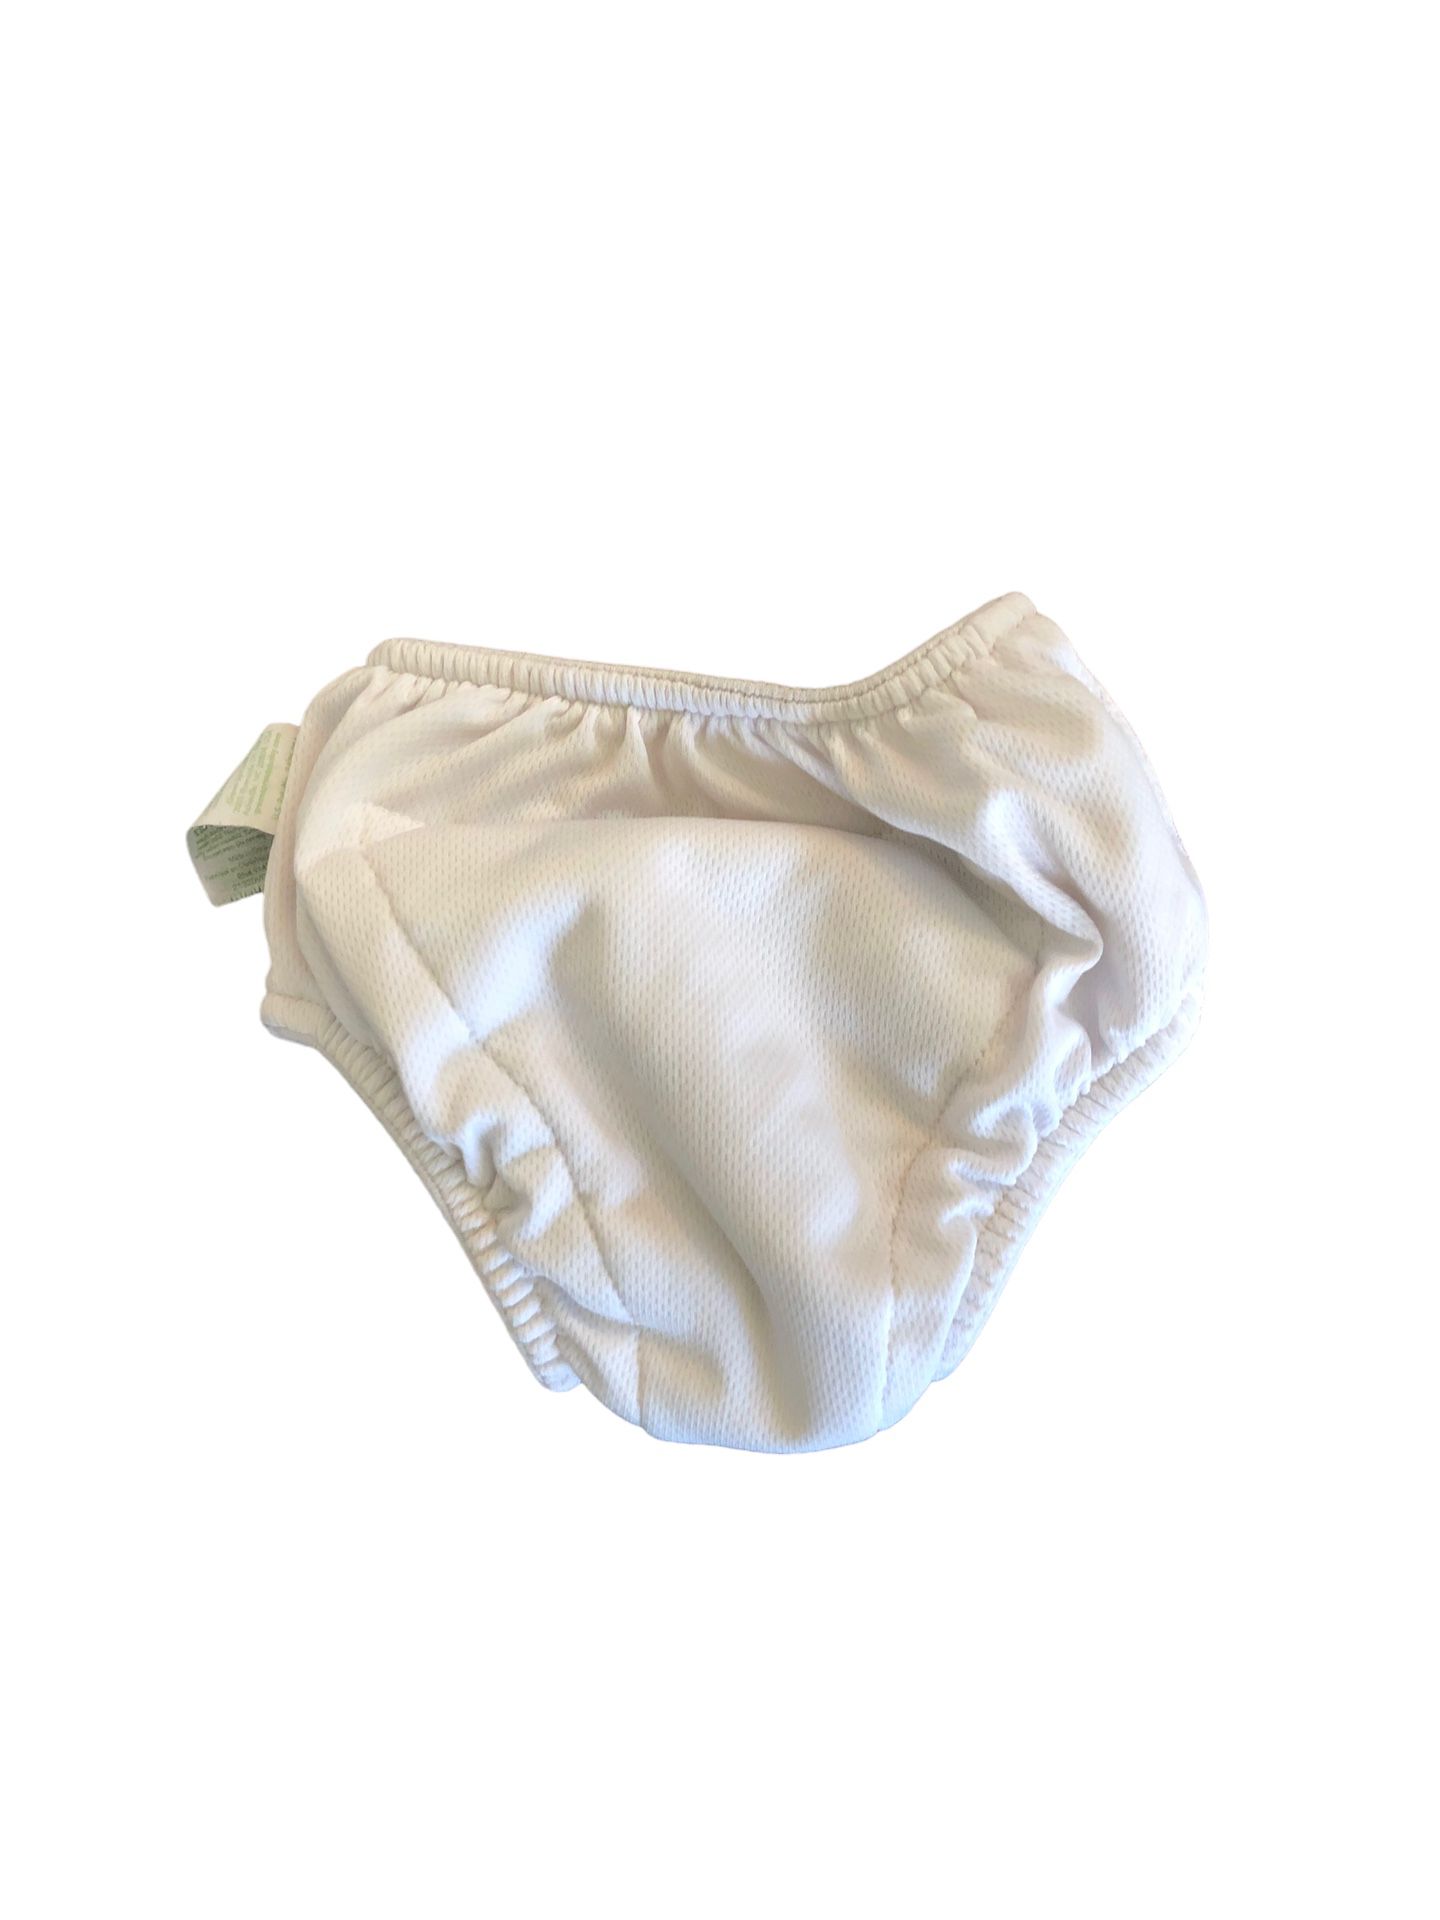 EUC 18 m Unisex Green Sprouts White Reuseable Washable Swim Diaper